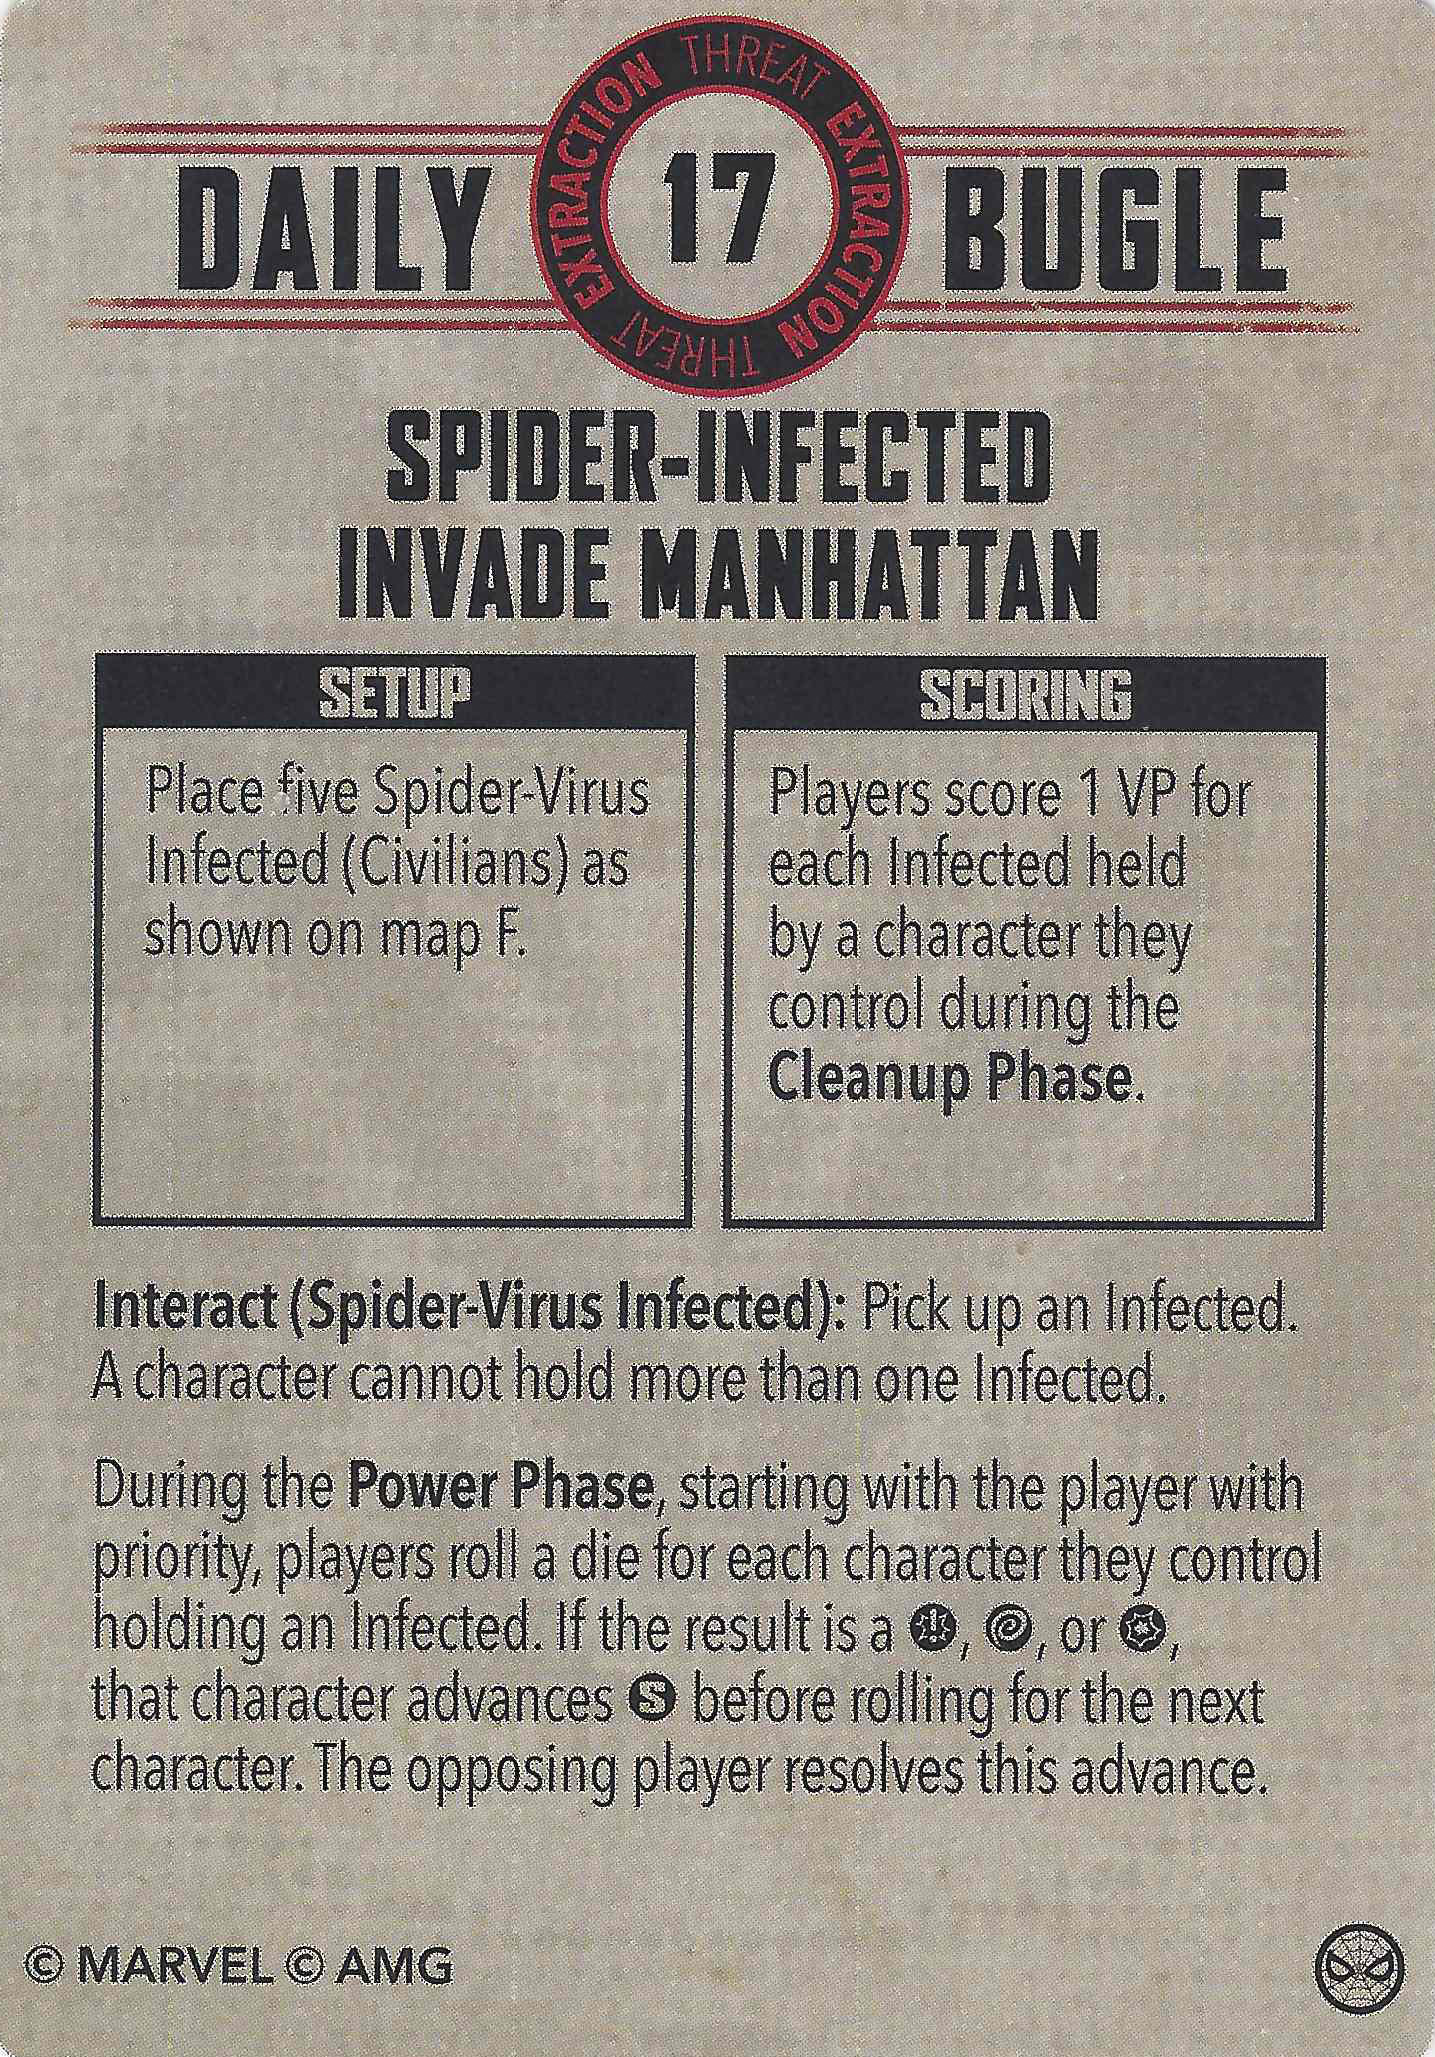 Marvel Crisis Protocol - Spider-infected invade Manhattan